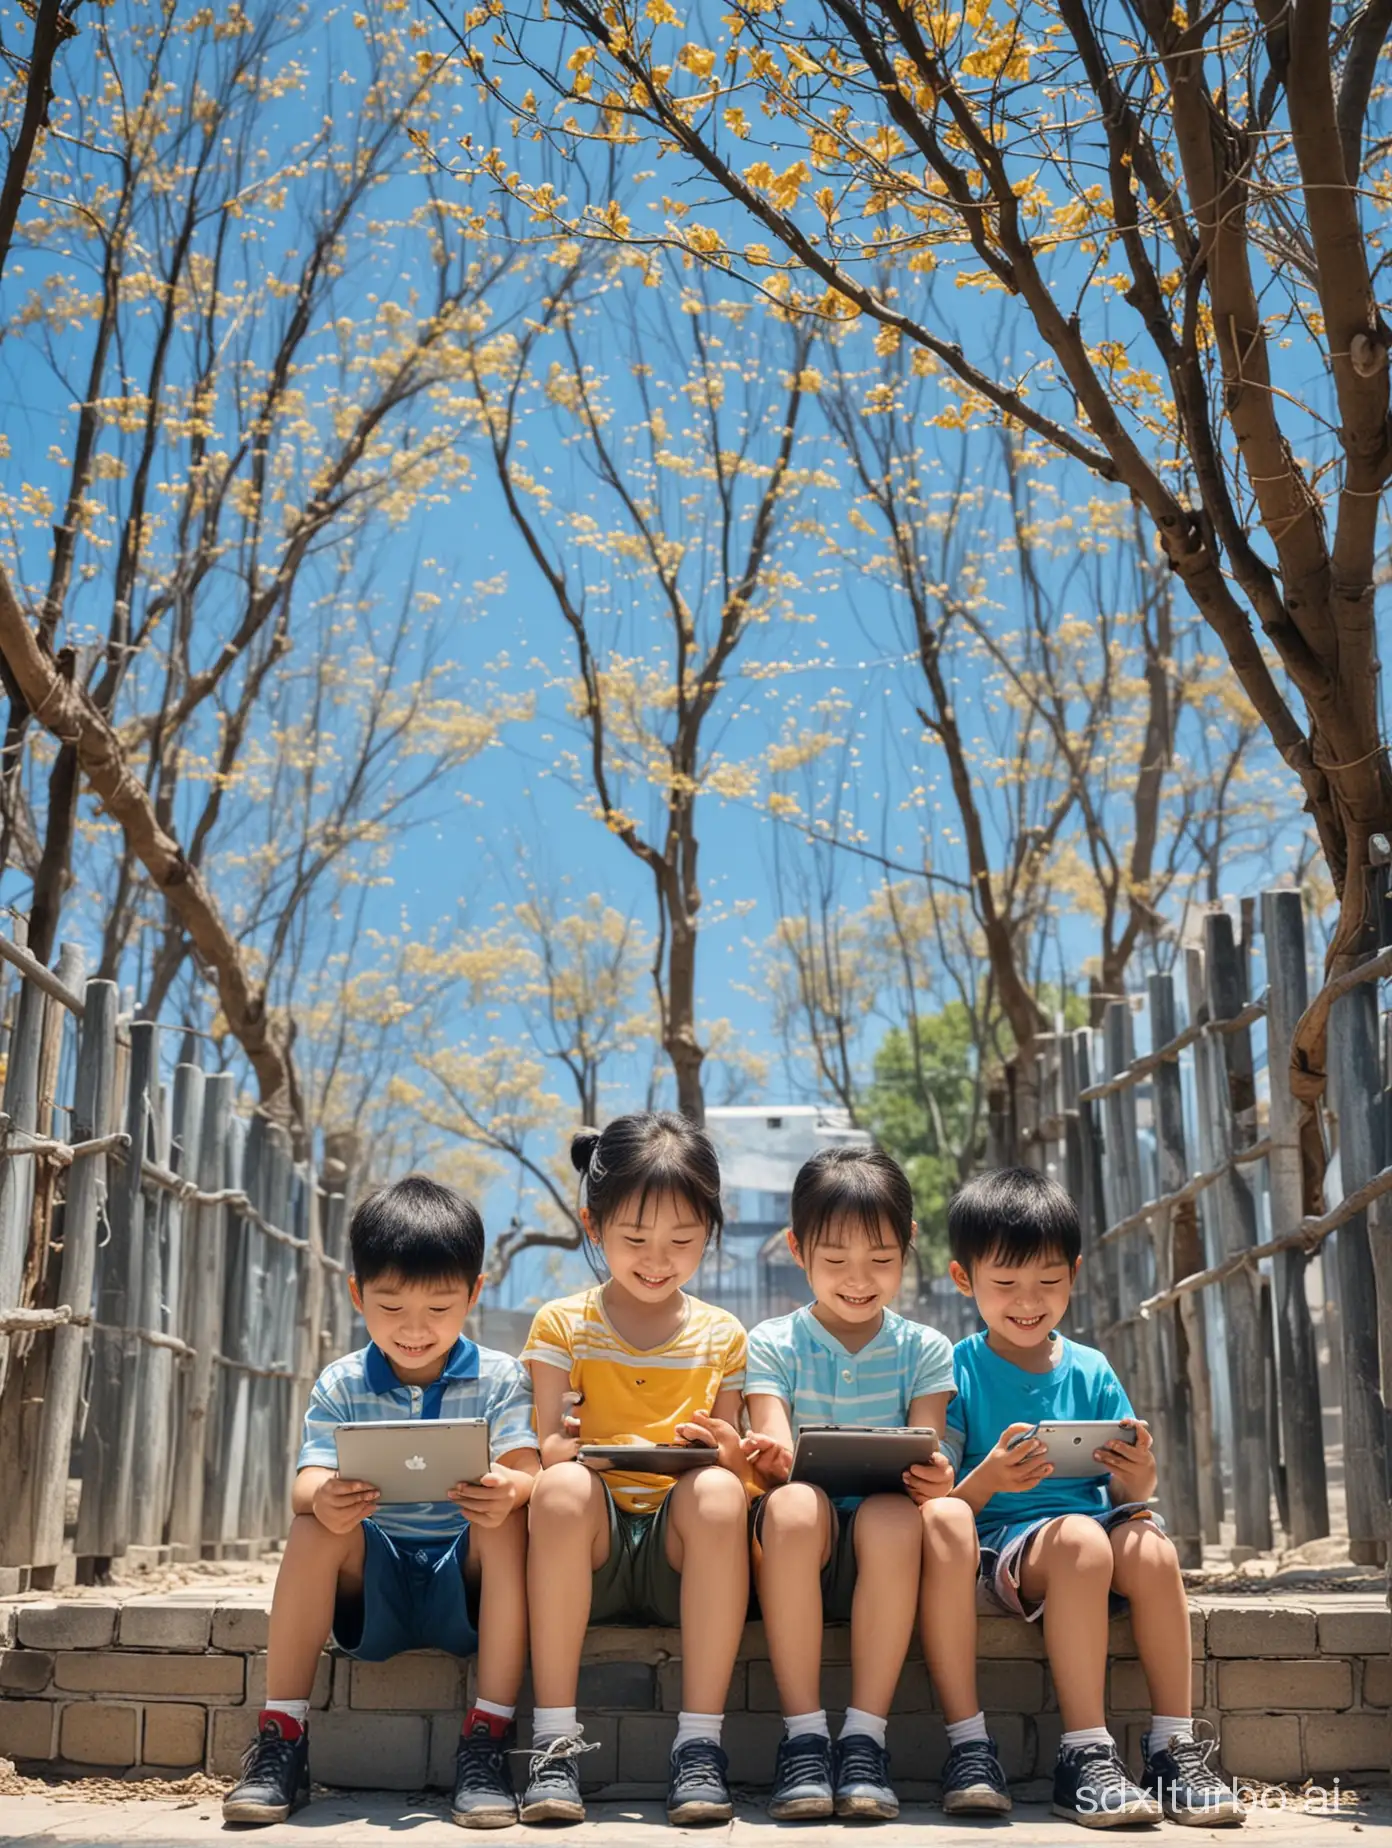 Joyful-Chinese-Children-Embracing-Technology-Outdoors